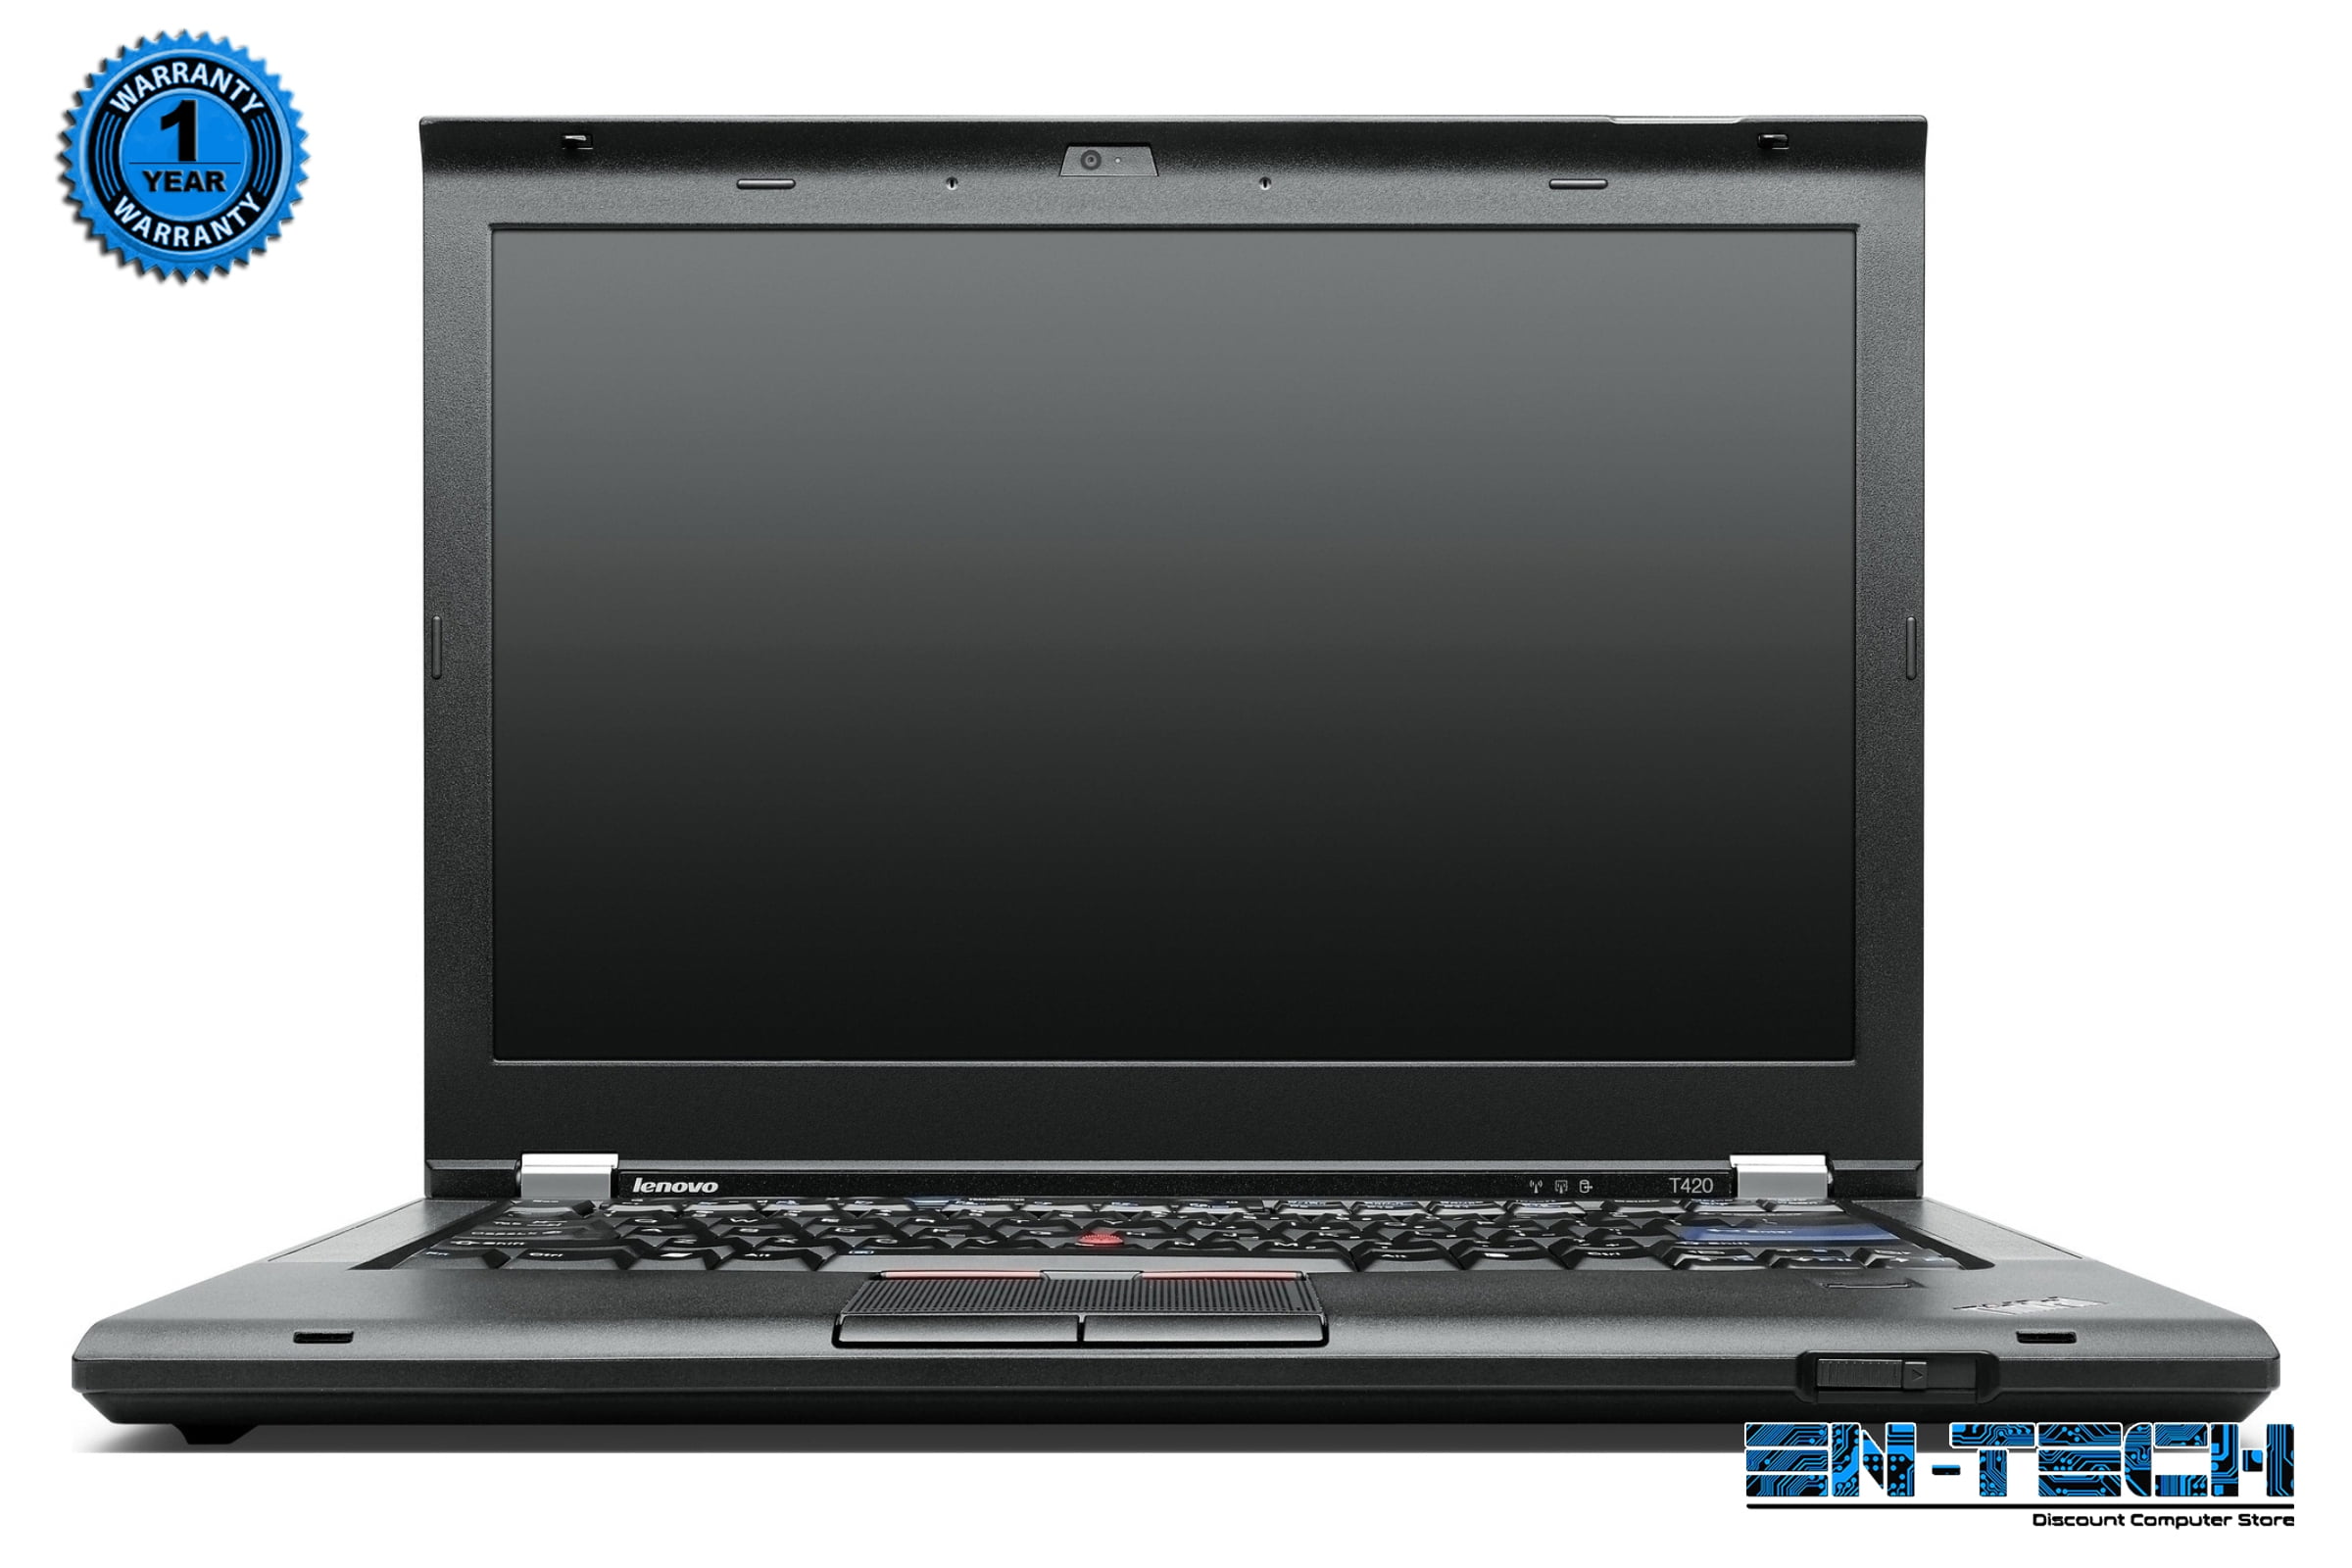 Lenovo ThinkPad T420 14.0" Black Used Laptop - Intel Core i5 2520M 2nd Gen 2.5 GHz 4GB DDR3 SATA 2.5" 500GB HDD DVD-Combo Windows 10 Home 64-Bit - Walmart.com